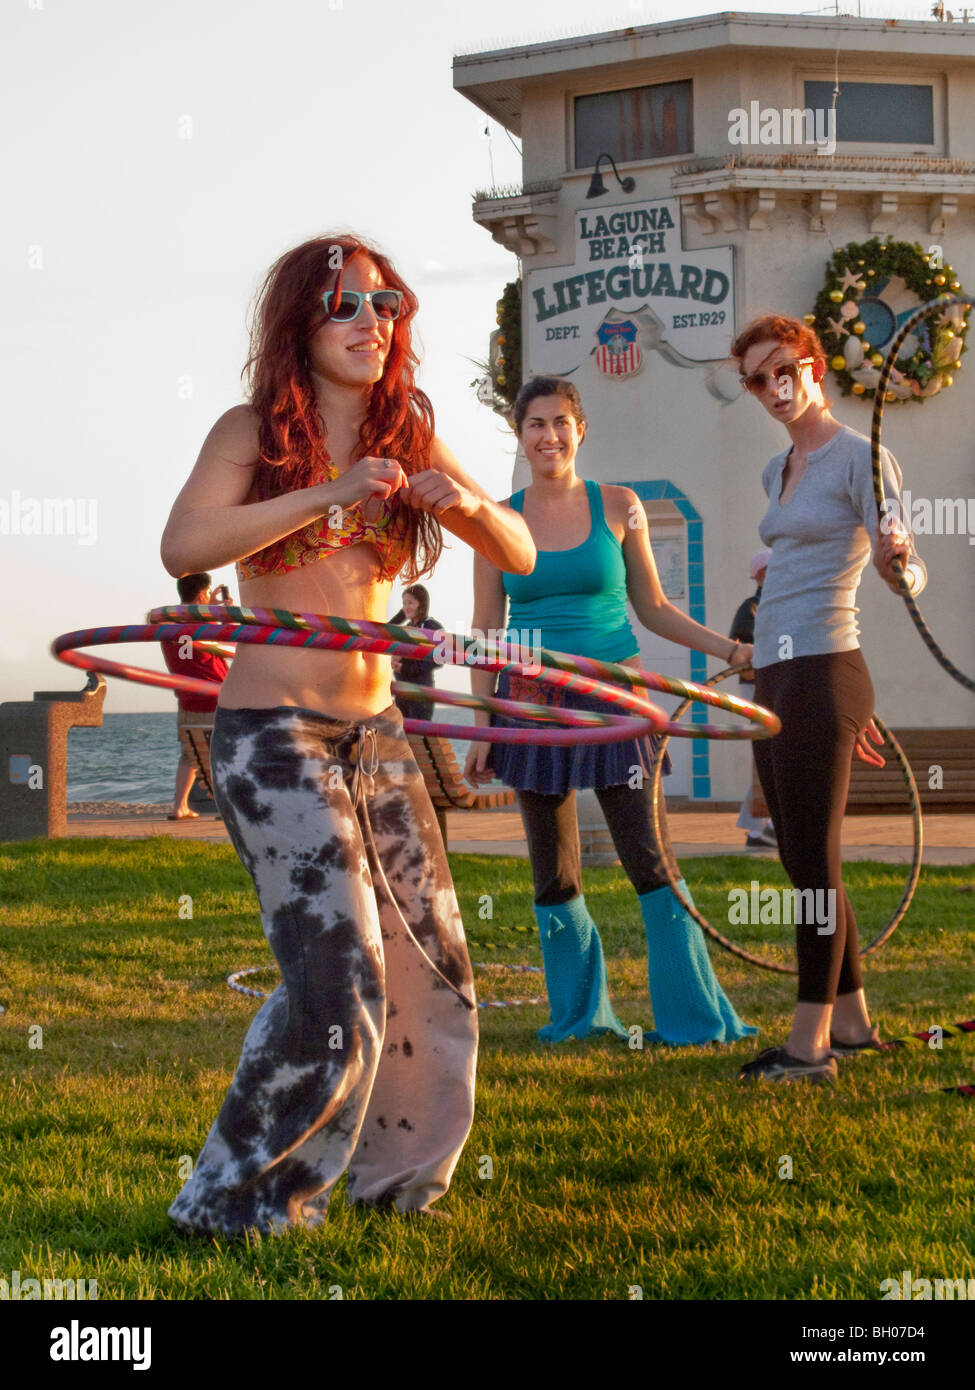 Heureux les amateurs de hula hoop tenir une session' 'Hoopnosis en fin d'après-midi à Laguna Beach, CA. Remarque lifeguard building Banque D'Images